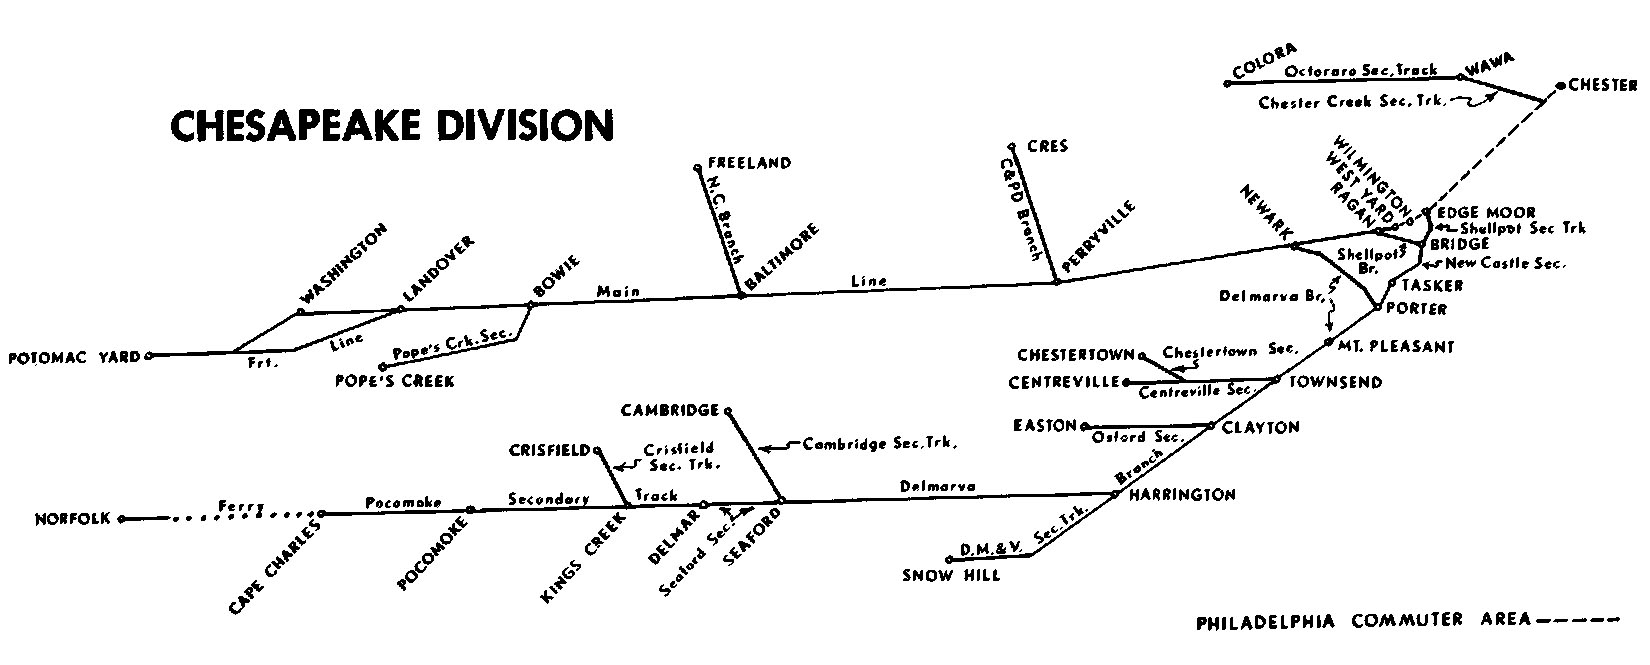 Penn Central Eastern Region Chesapeake Division Map 1972